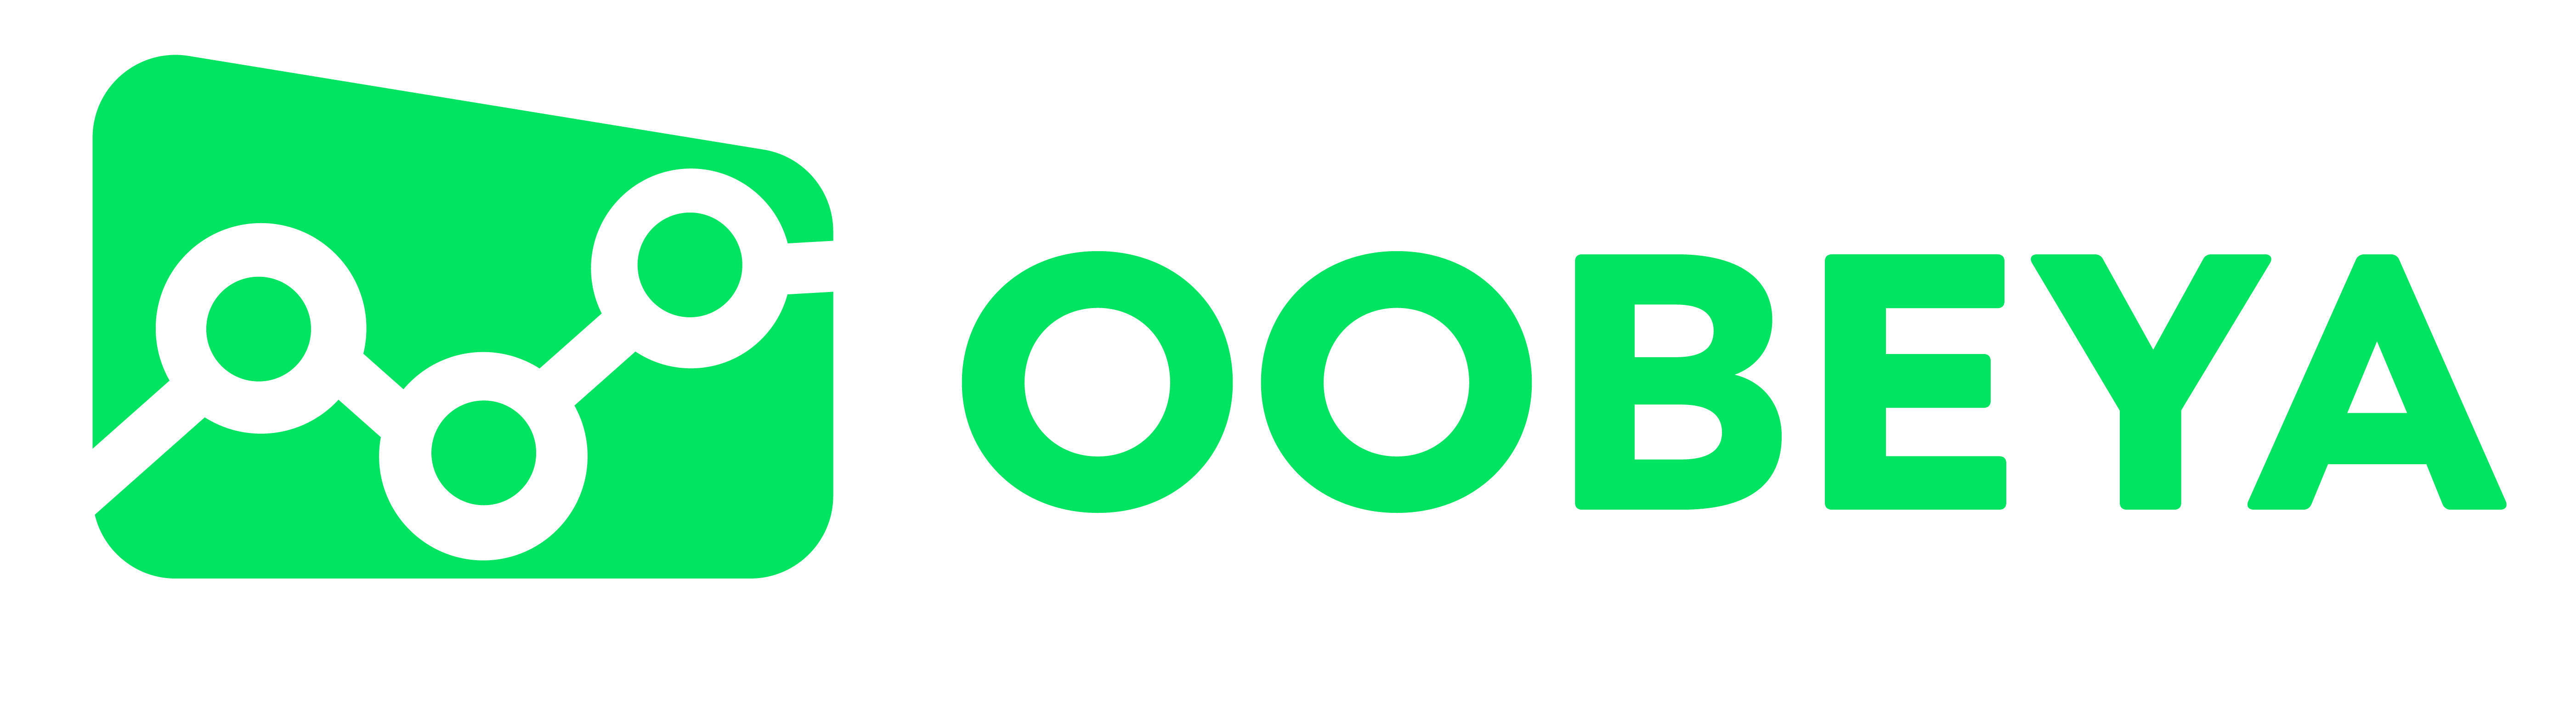 oobeya_logo